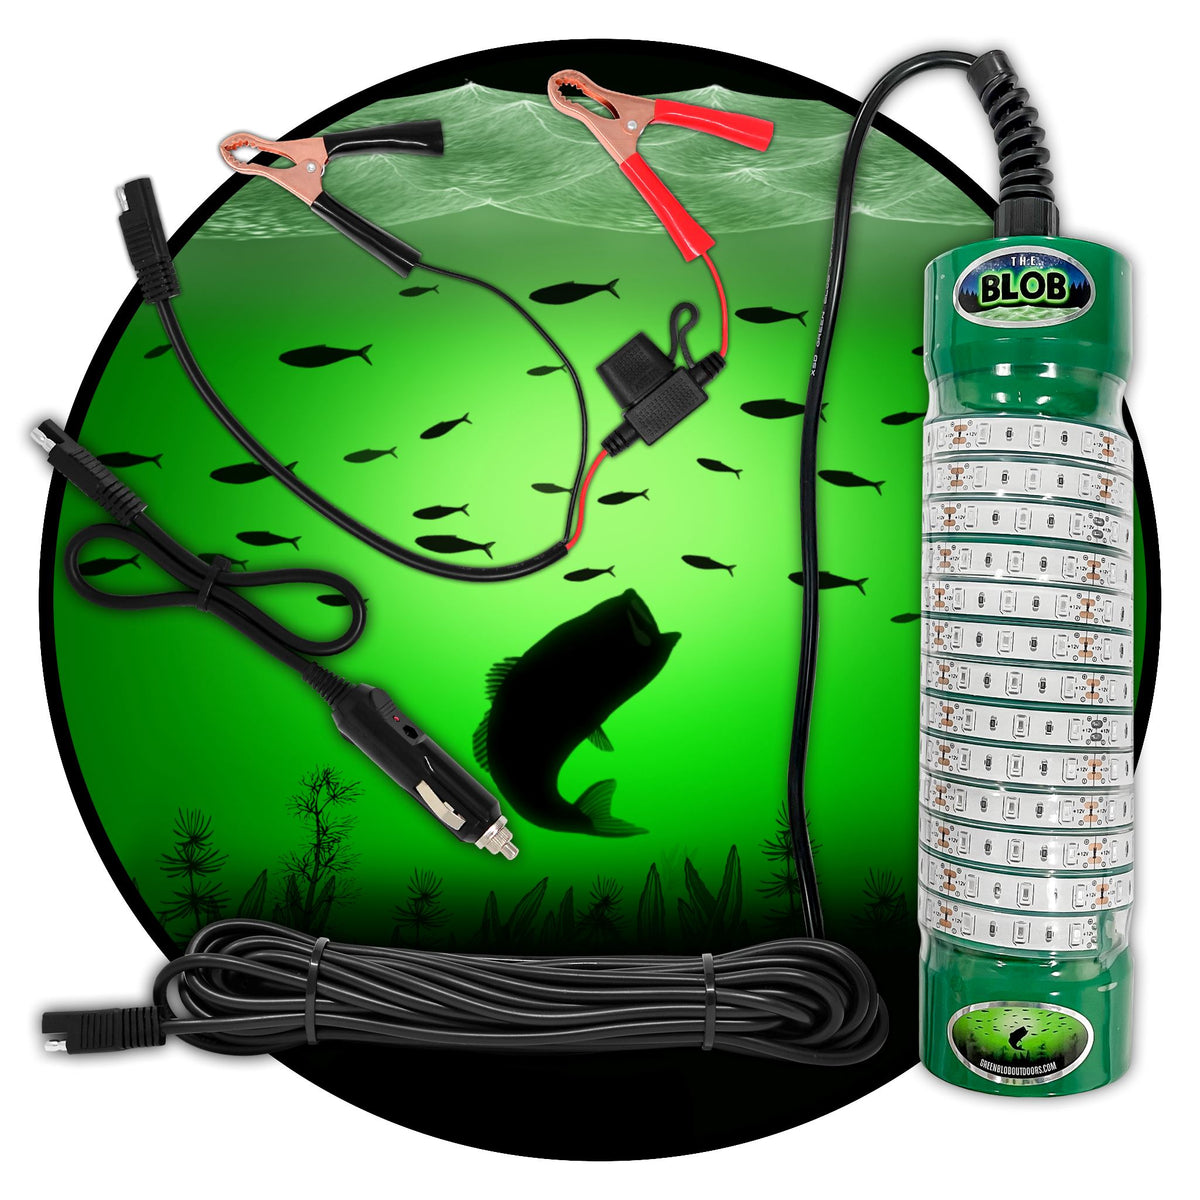 Build Your Blob Build Your Blob Green Blob Outdoors Green 7,500 Lumens Alligator Clips + Cig Lighter Plug 30 Feet